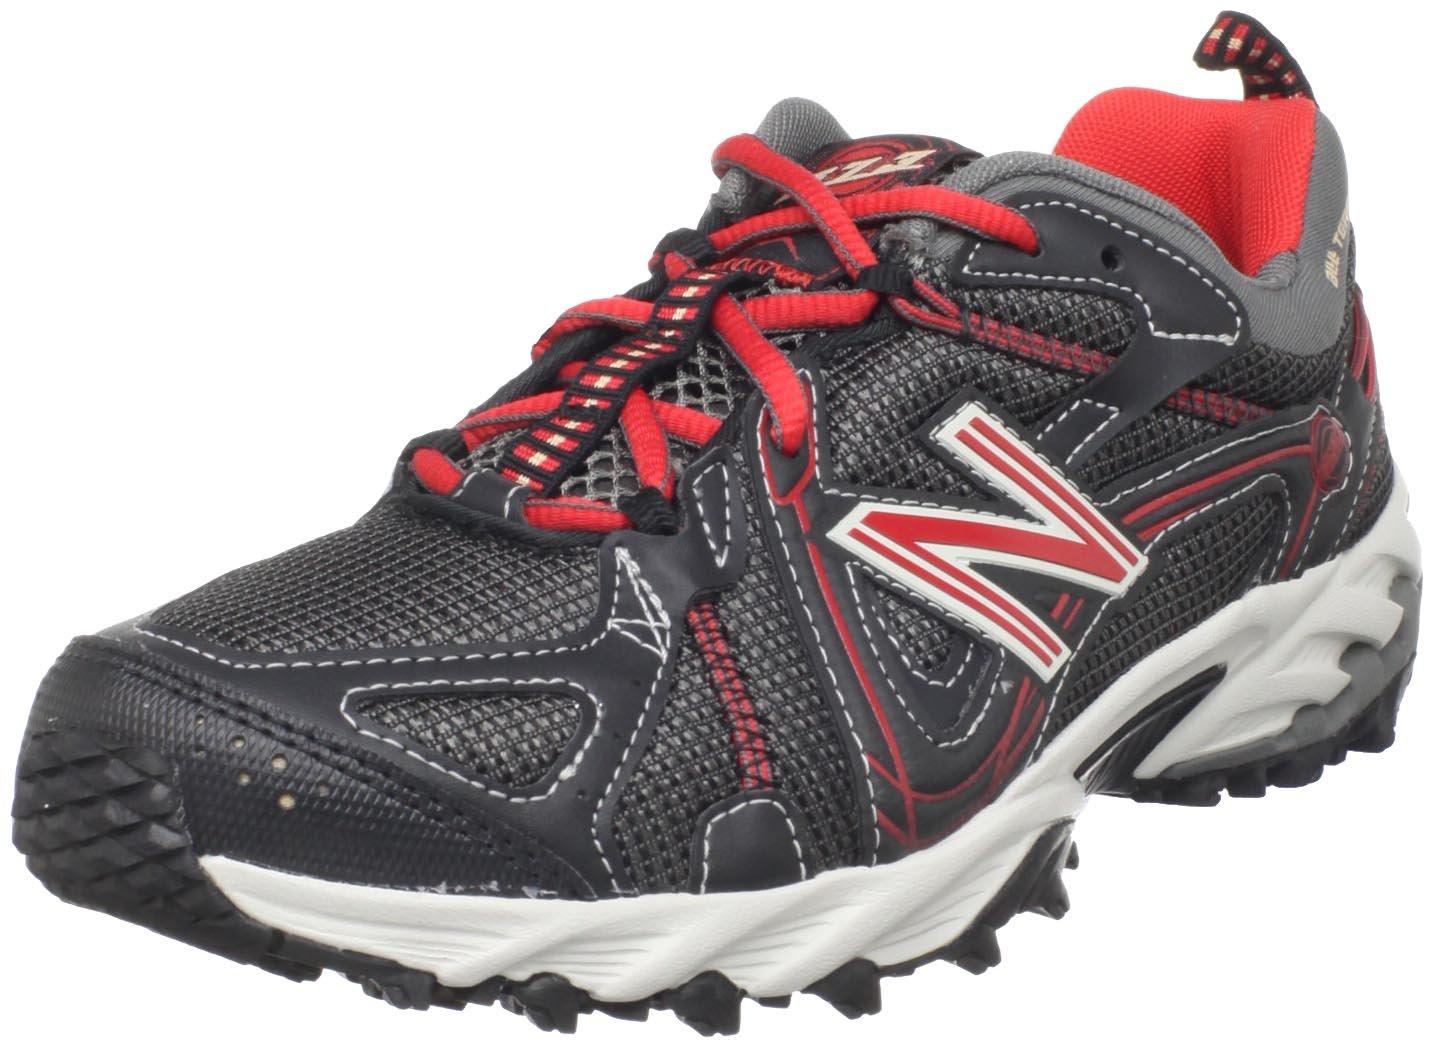 New Balance 573 V1 Trail Running Shoe | Lyst